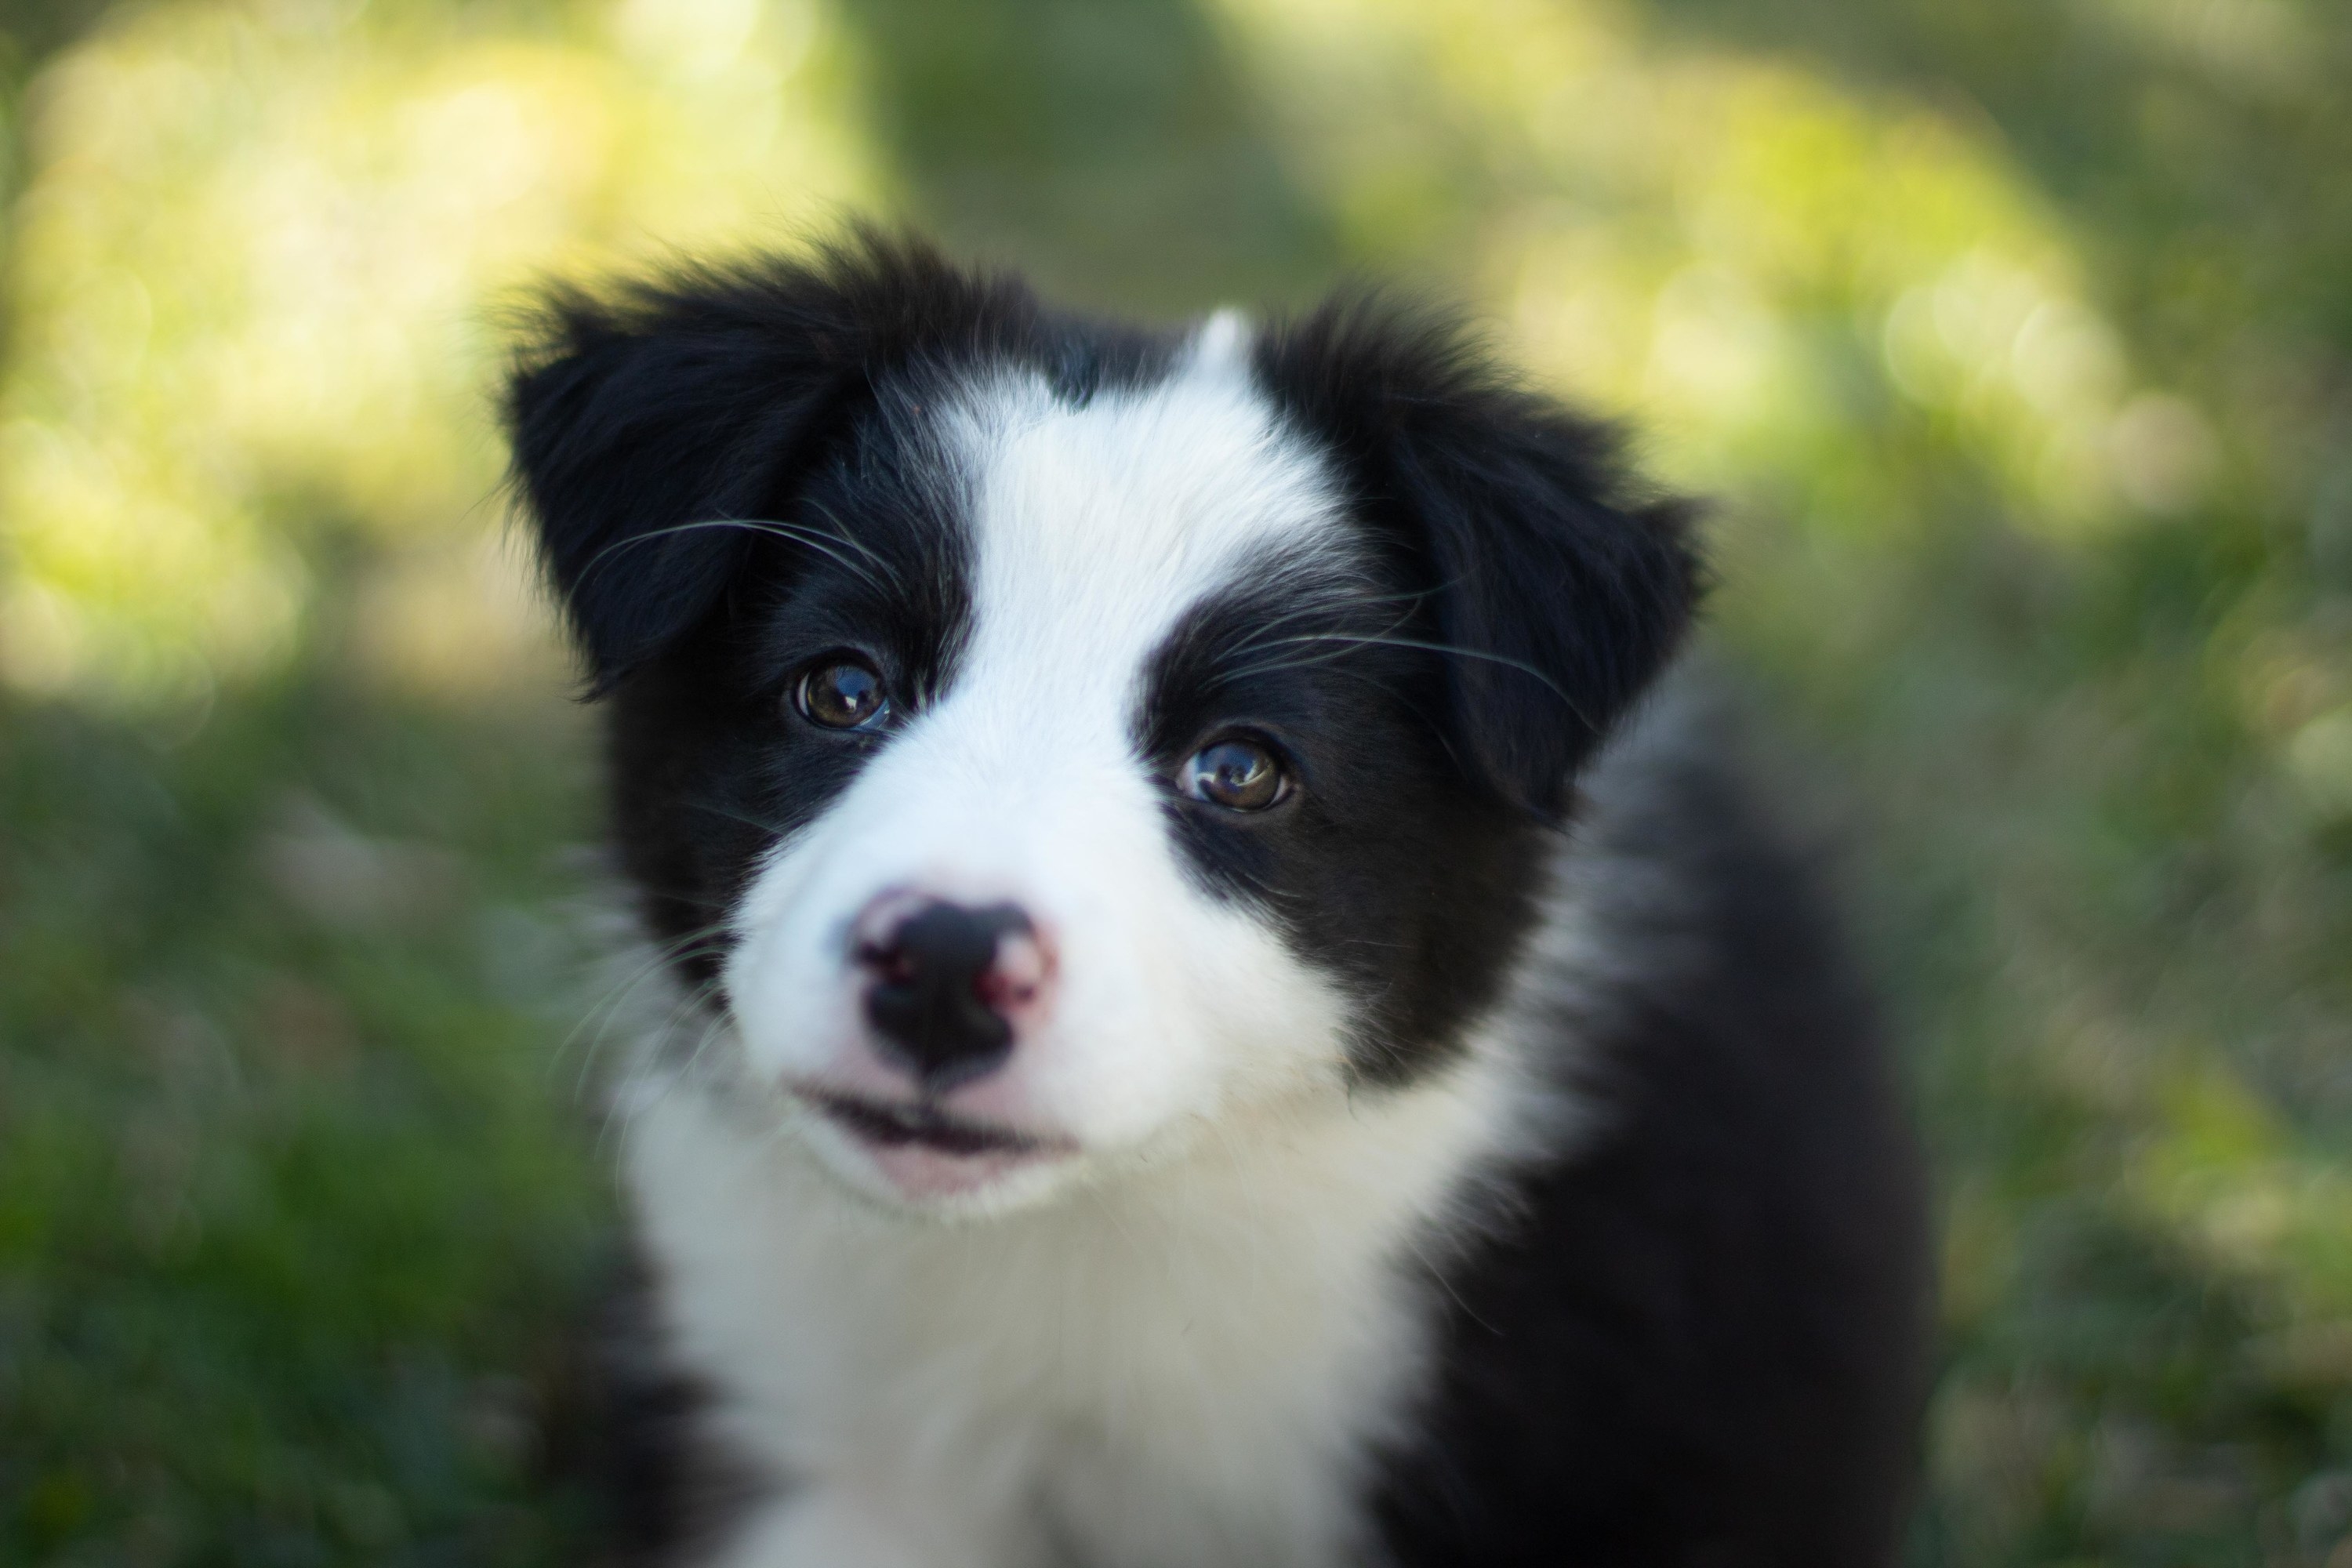 a puppy standing in grass